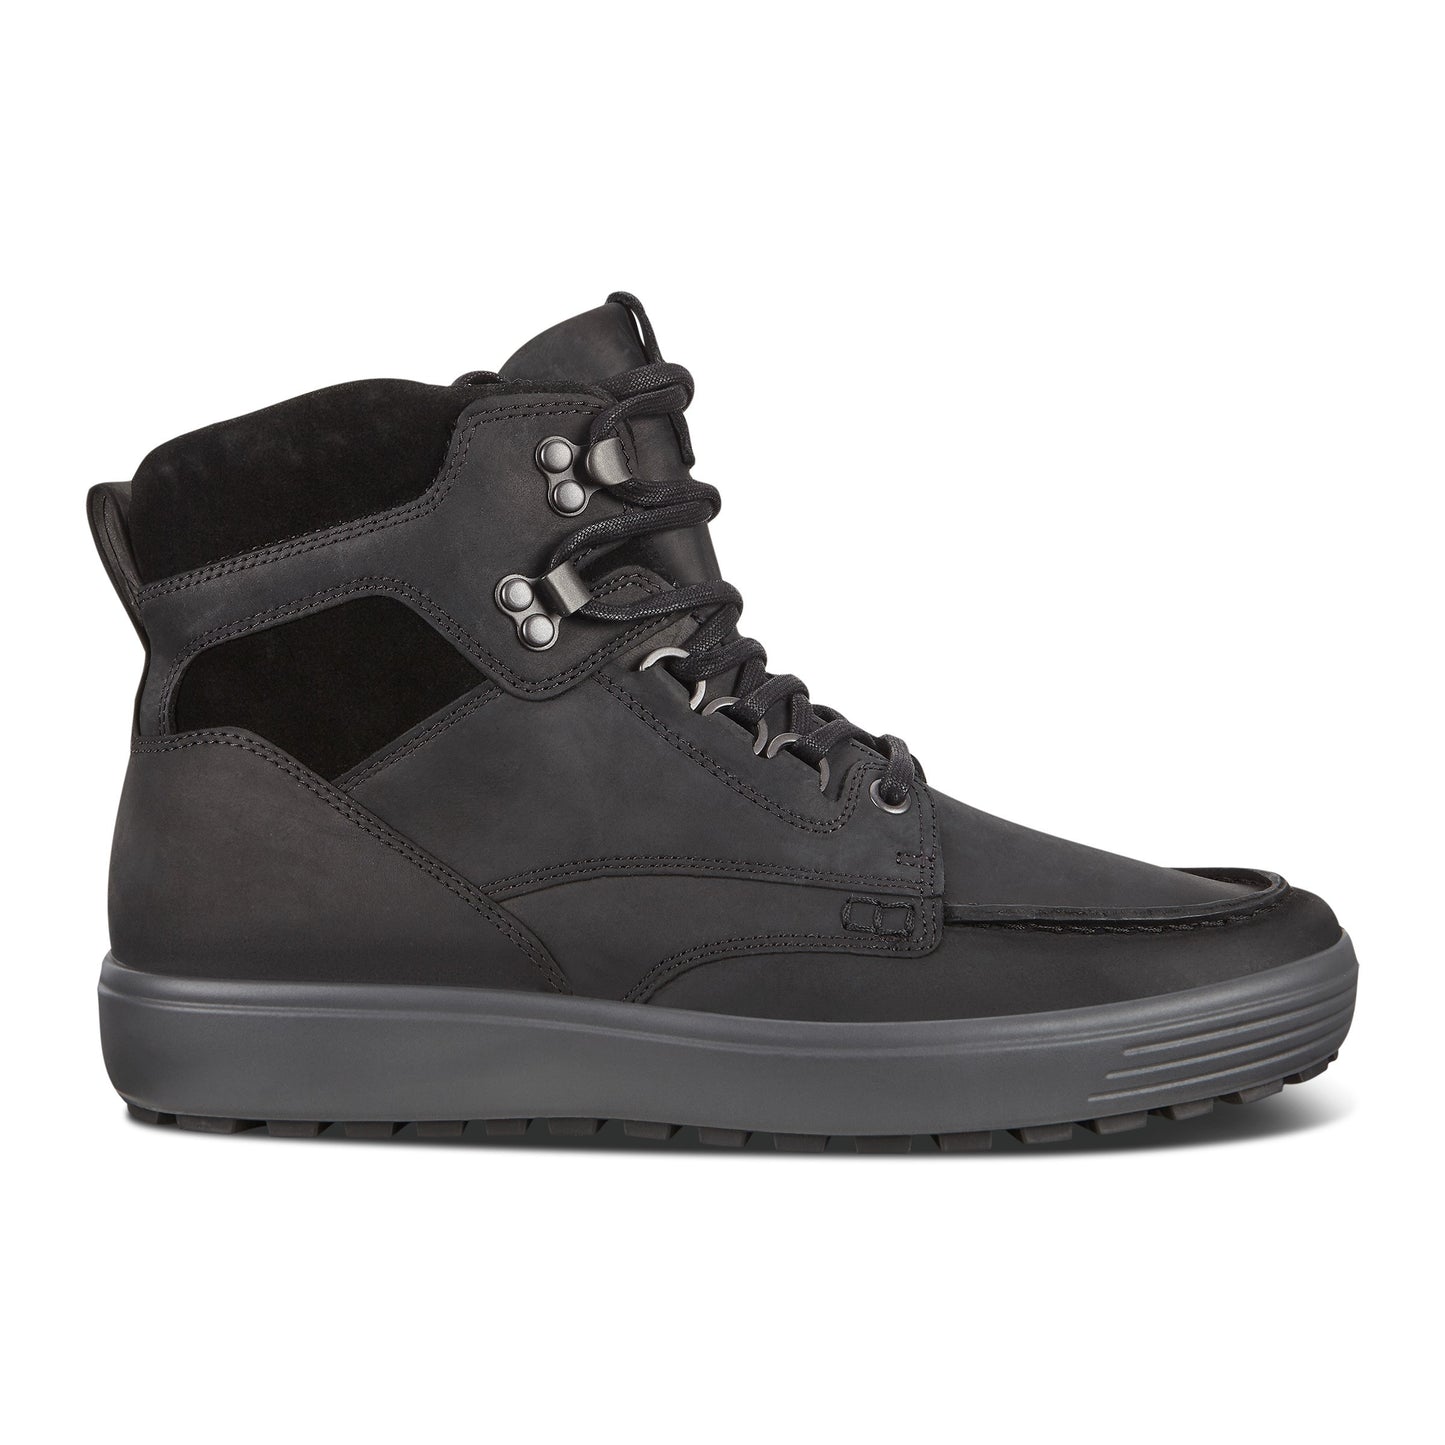 Ecco Men's Soft 7 Tred Ankle Boot Waterproof - Black/Black